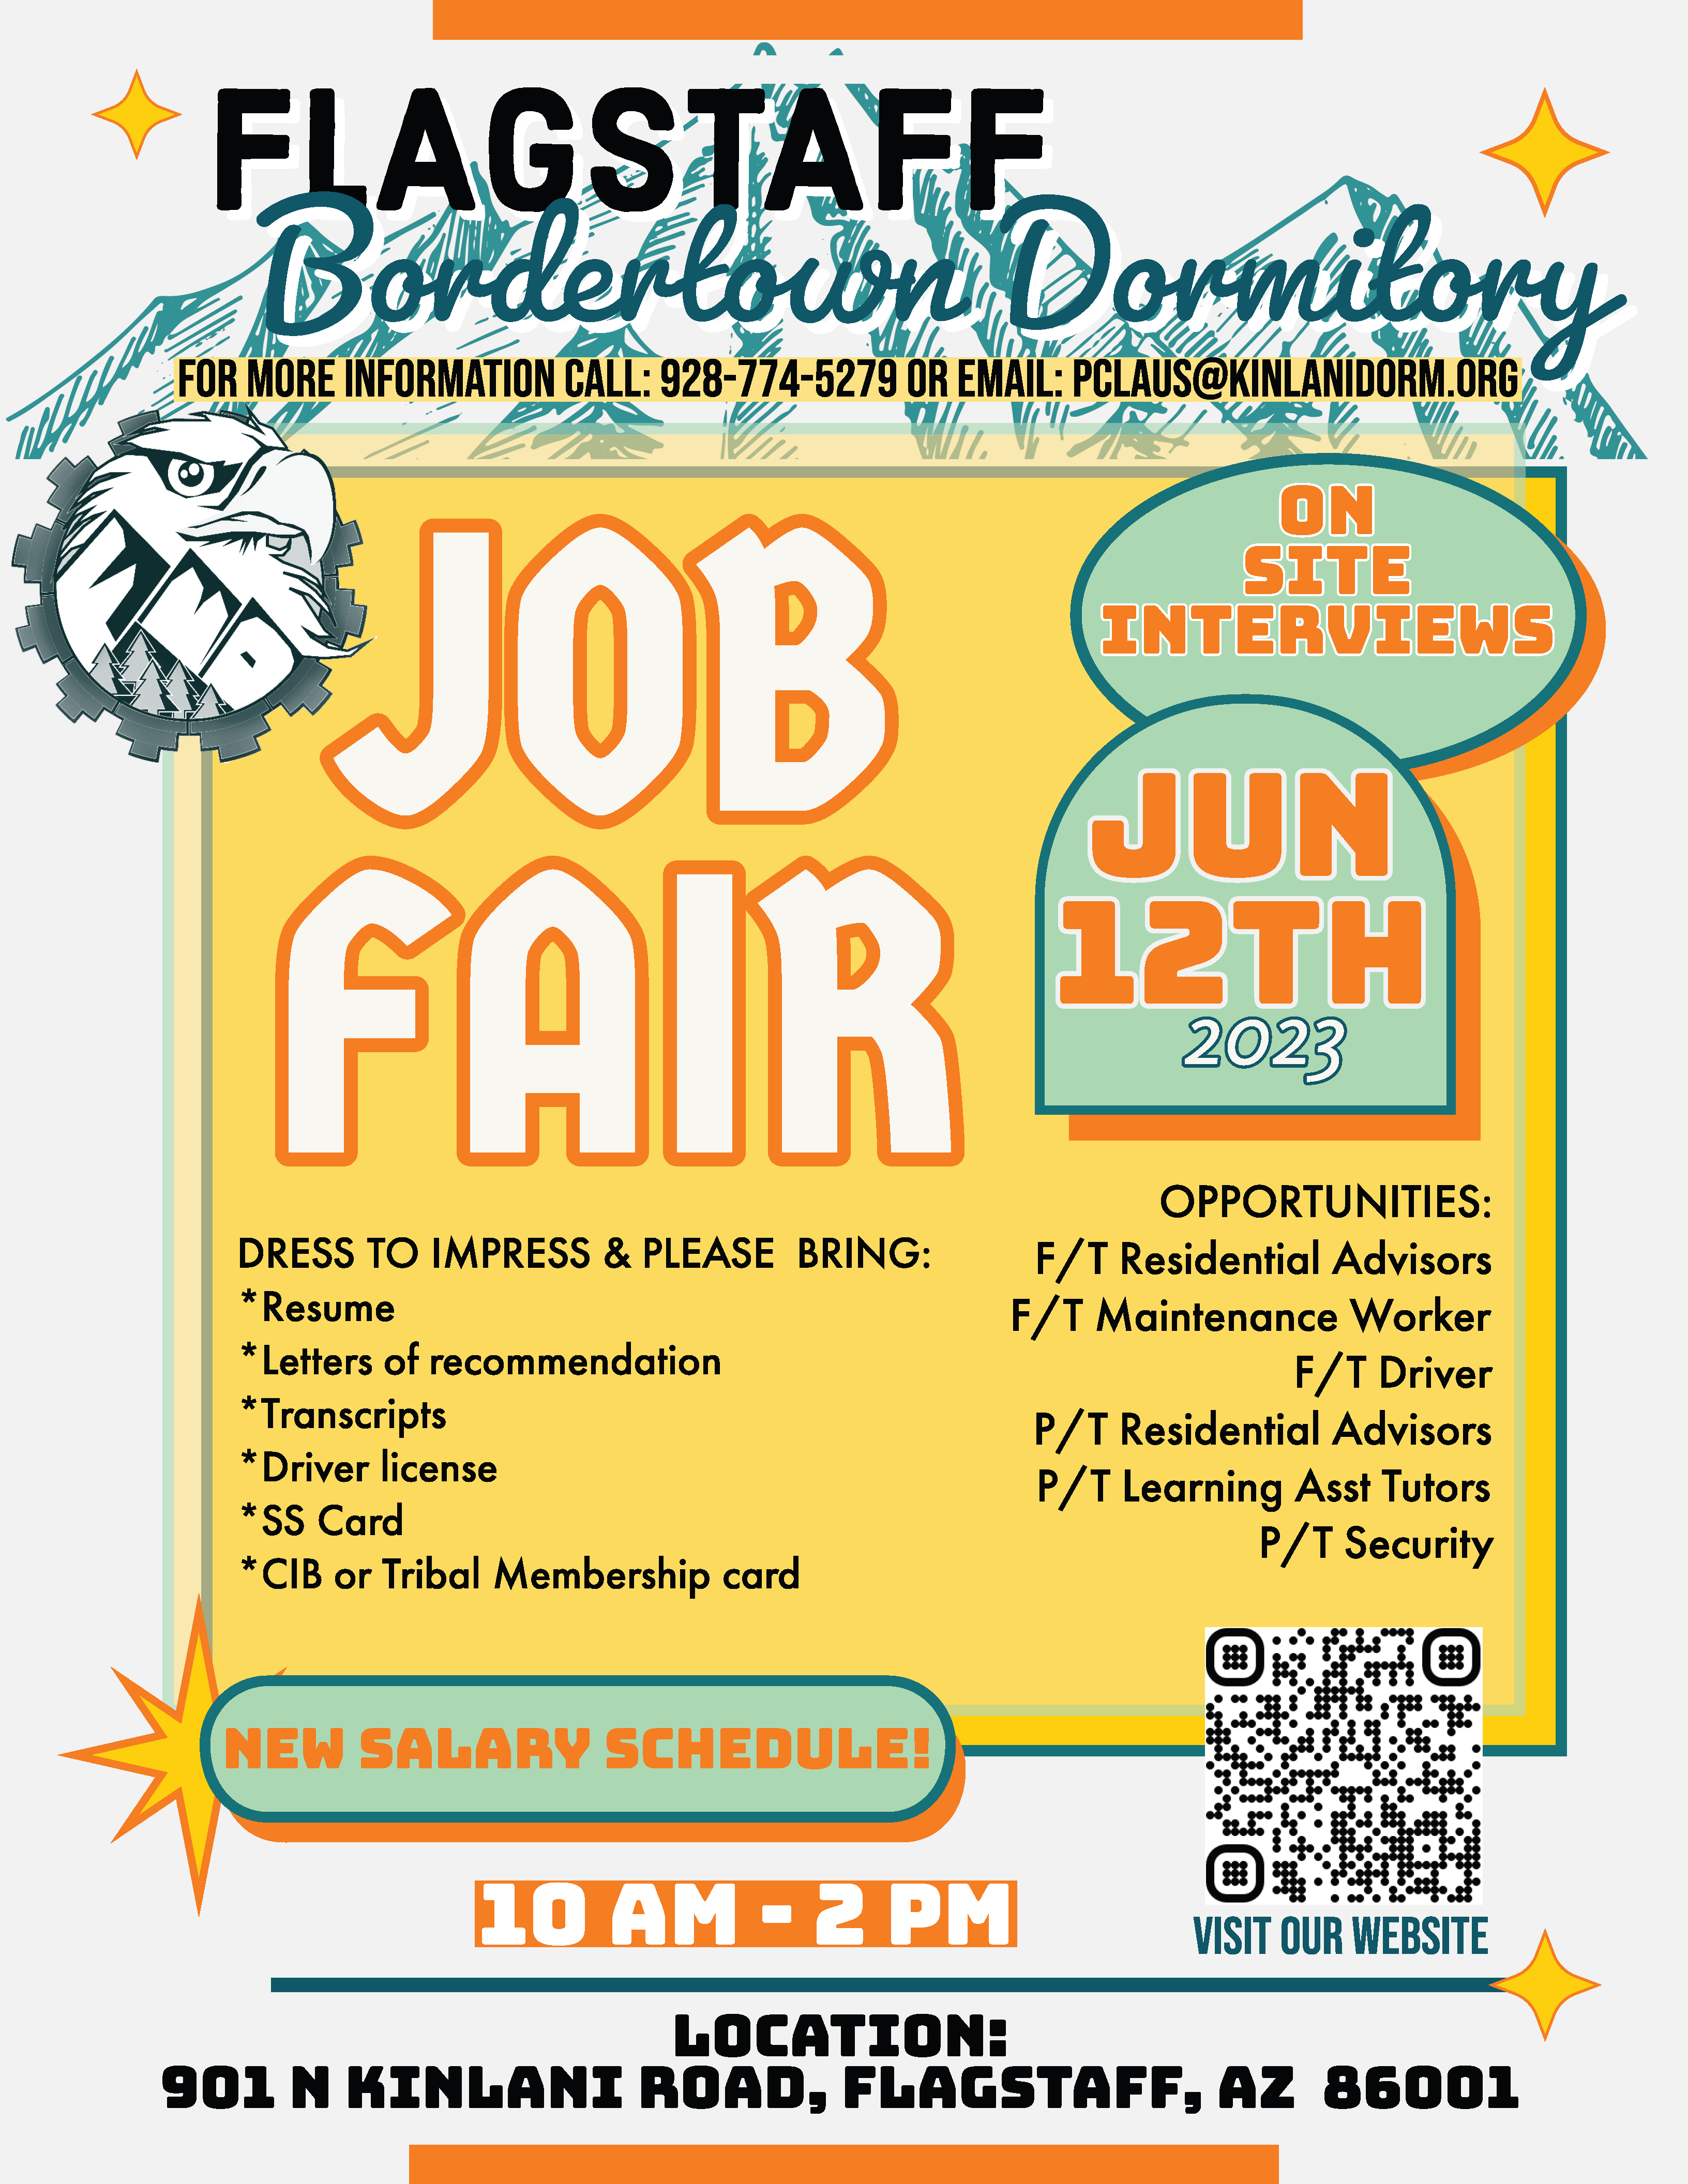 Flagstaff Bordertown Dormitory Job Fair